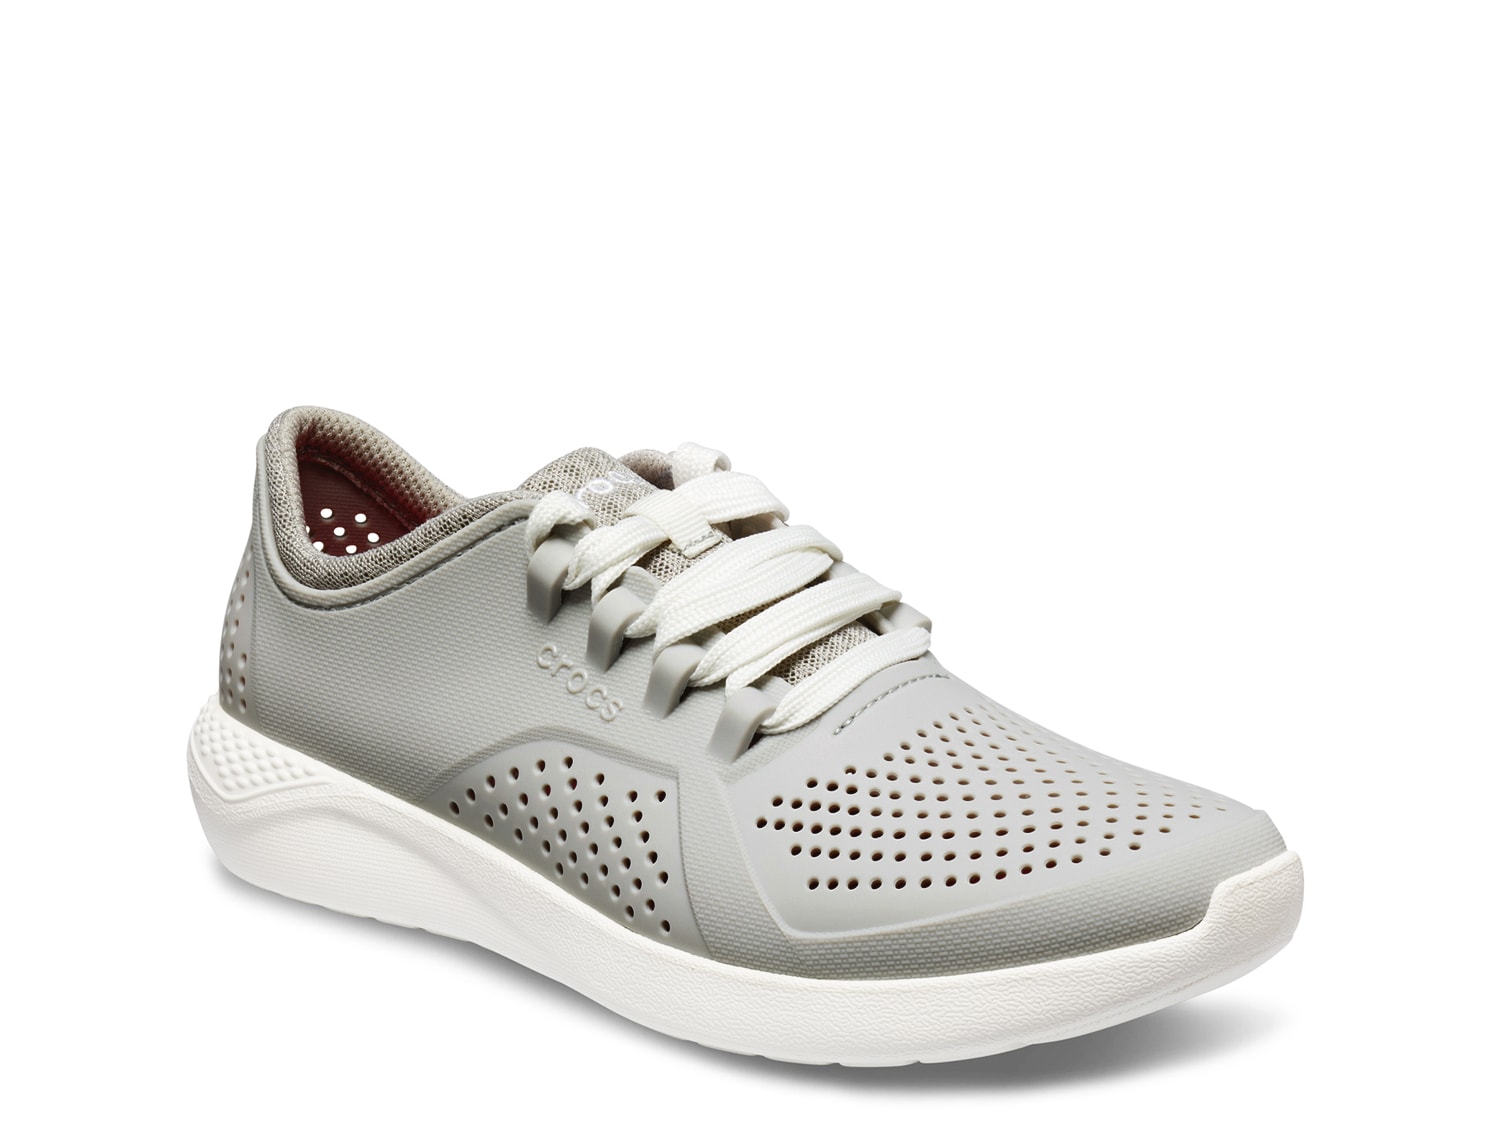 crocs tennis shoes white